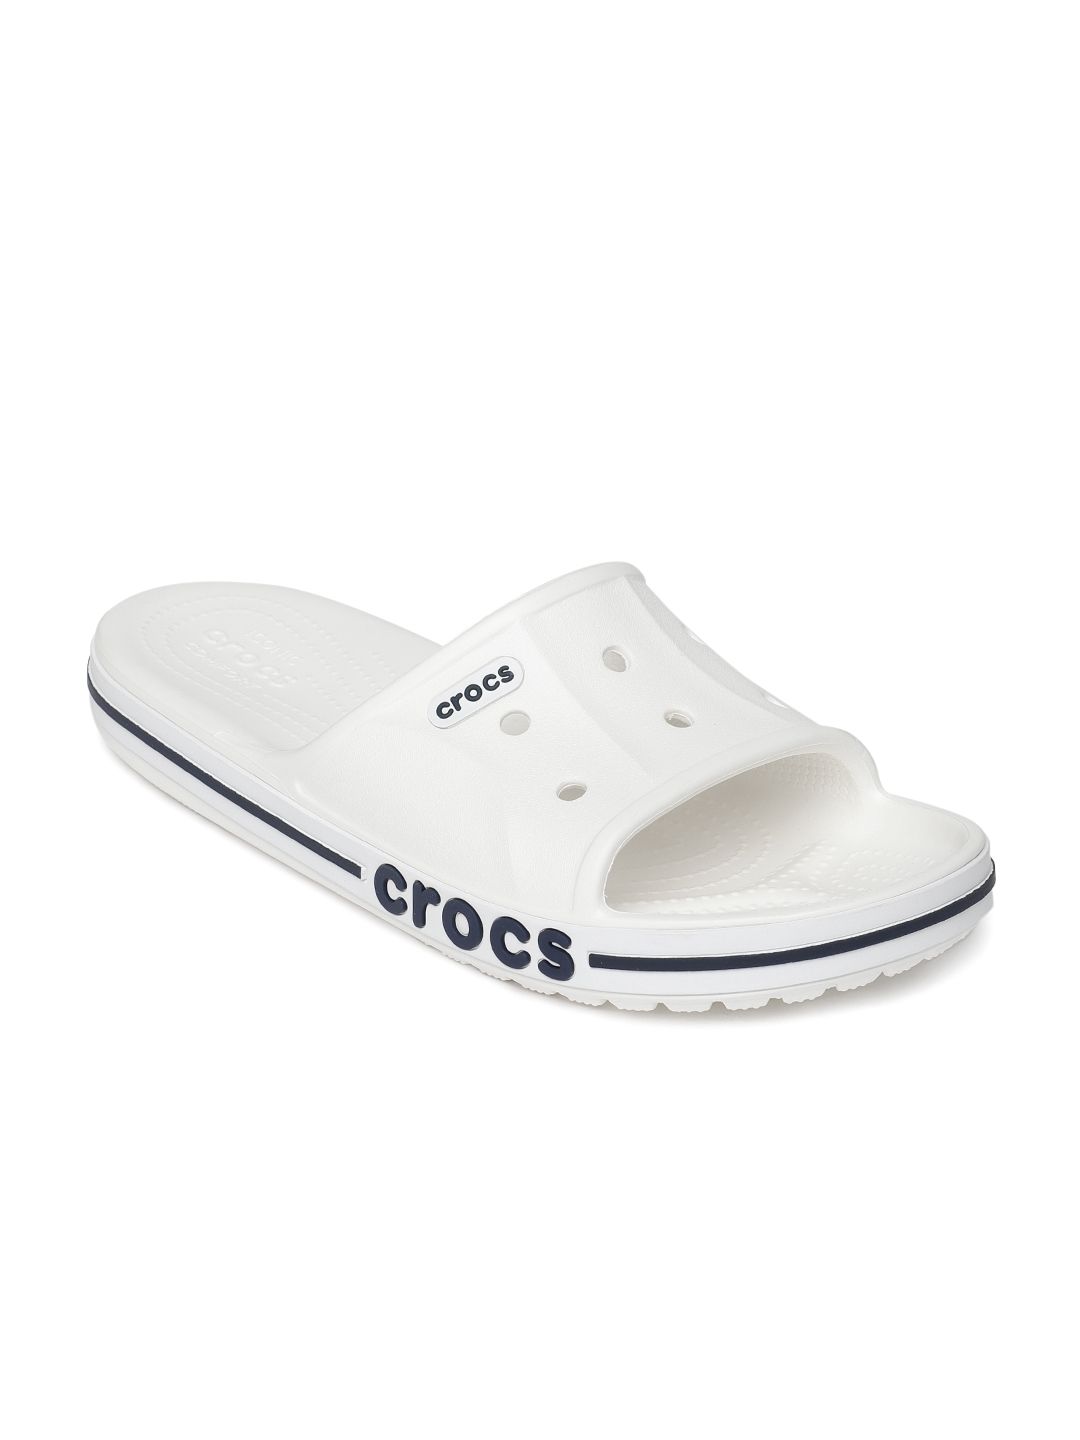 Crocs Unisex White Solid Sliders Price in India